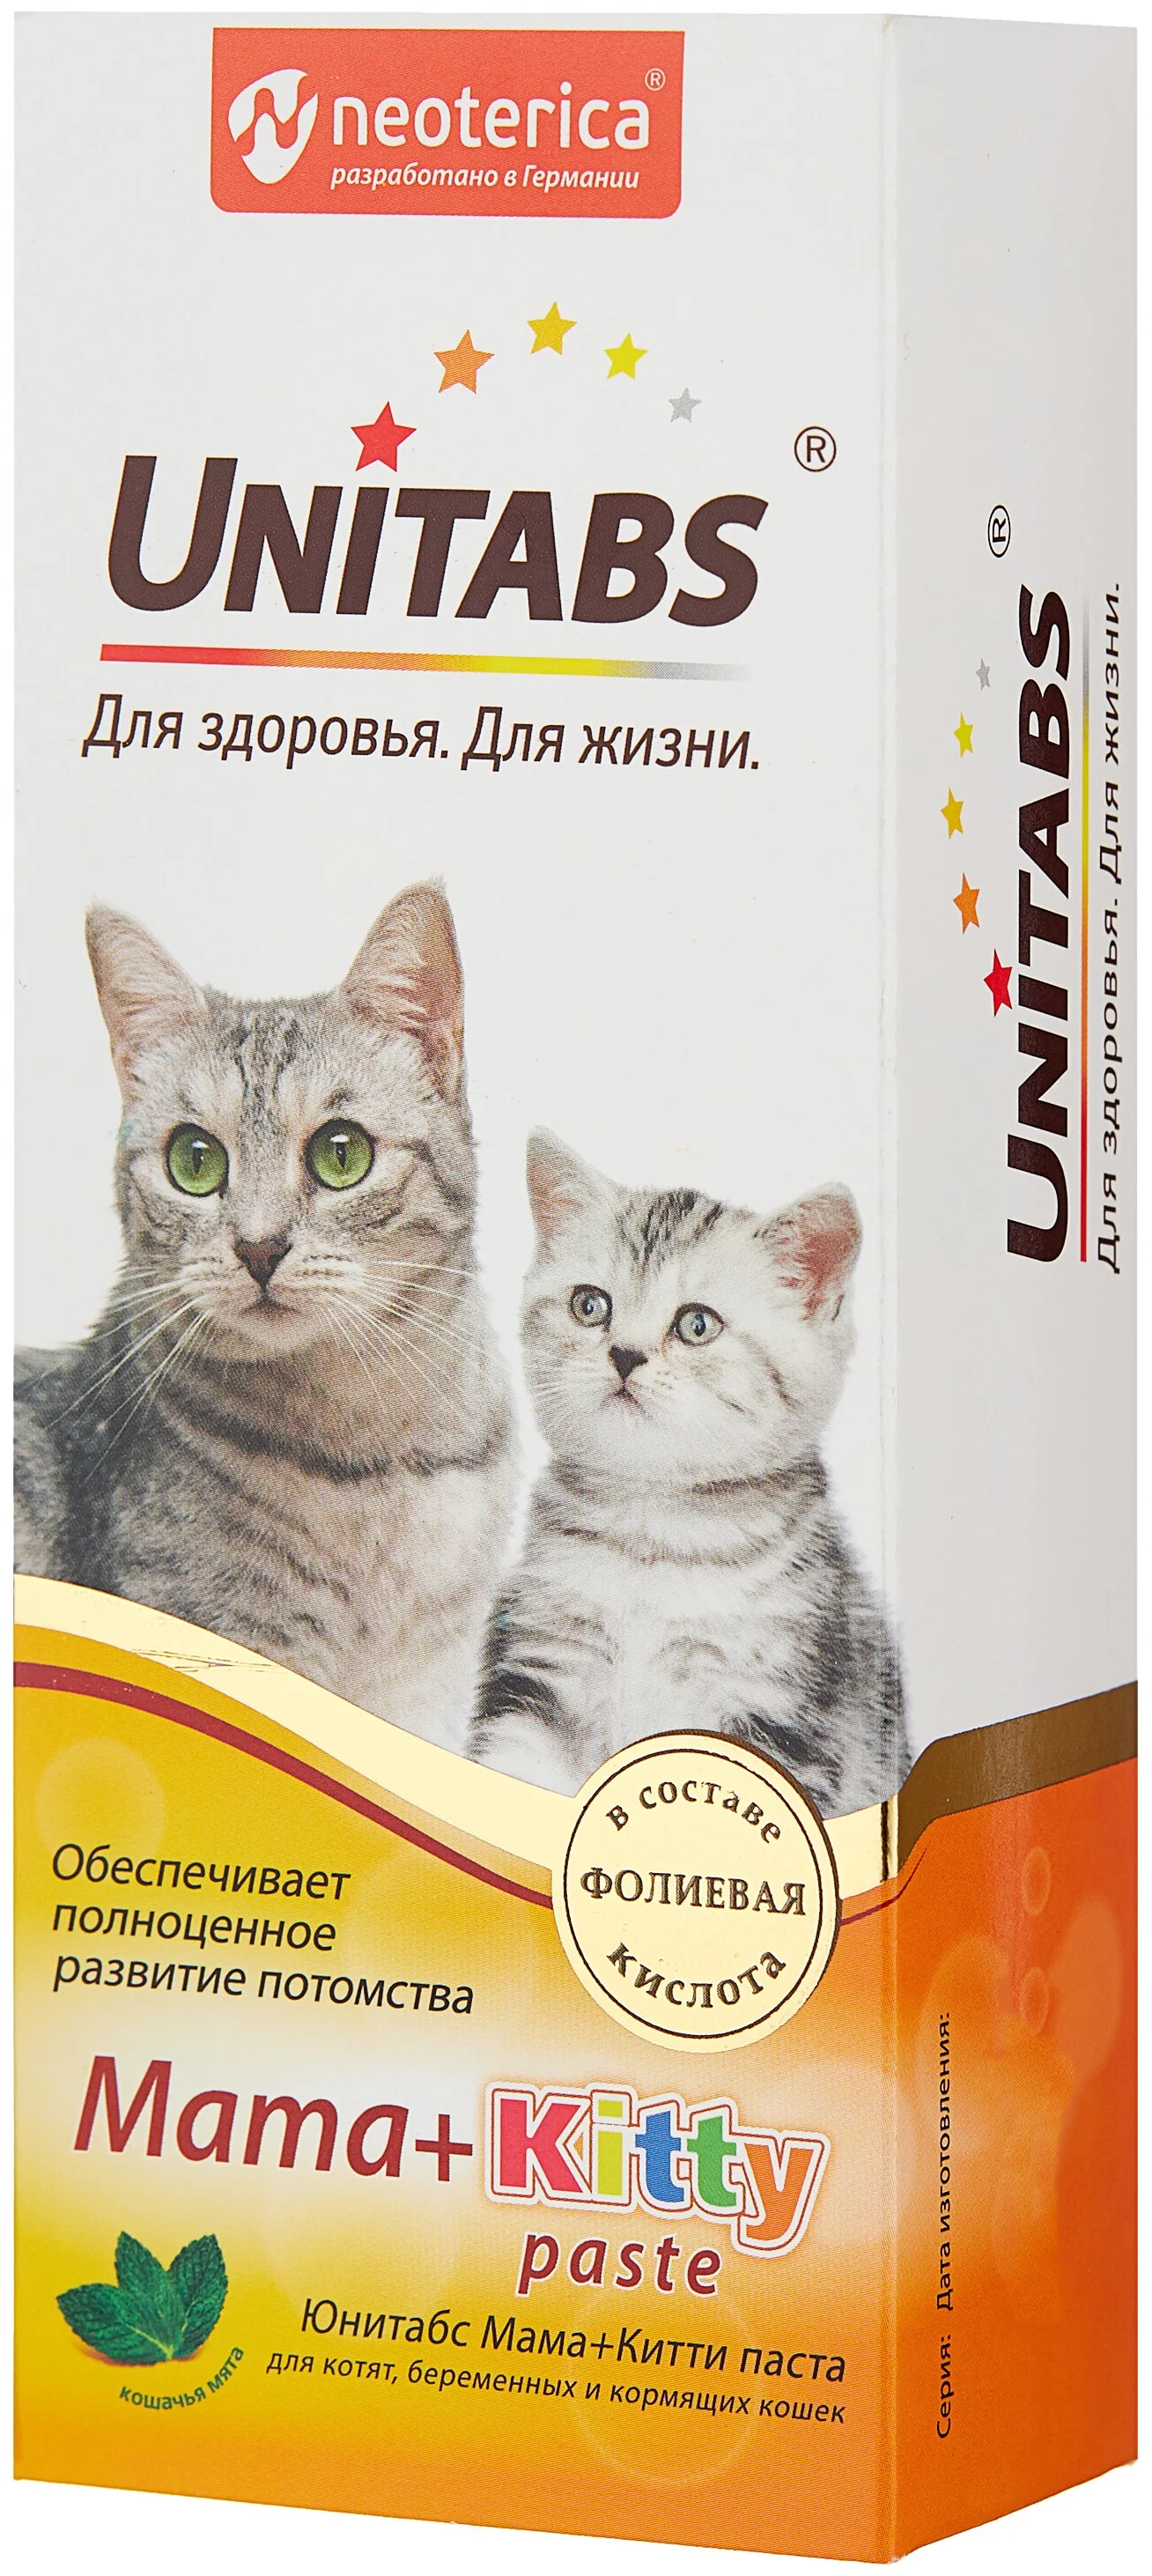 Unitabs Mama + Kitty паста - возраст: молодые, взрослые